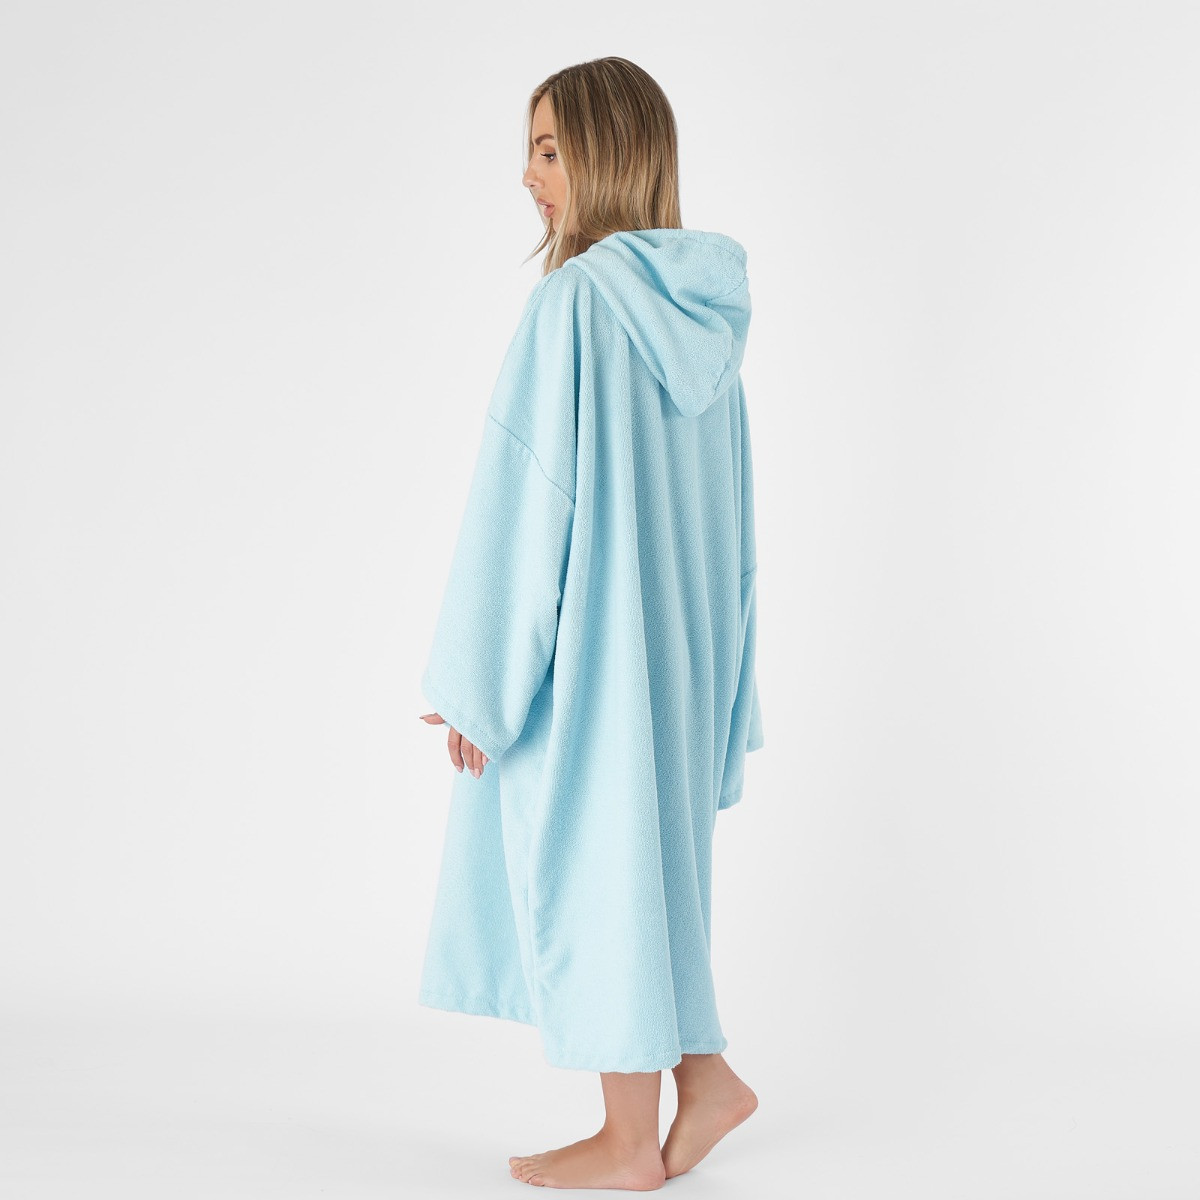 OHS Adult Towel Poncho - Sky Blue>